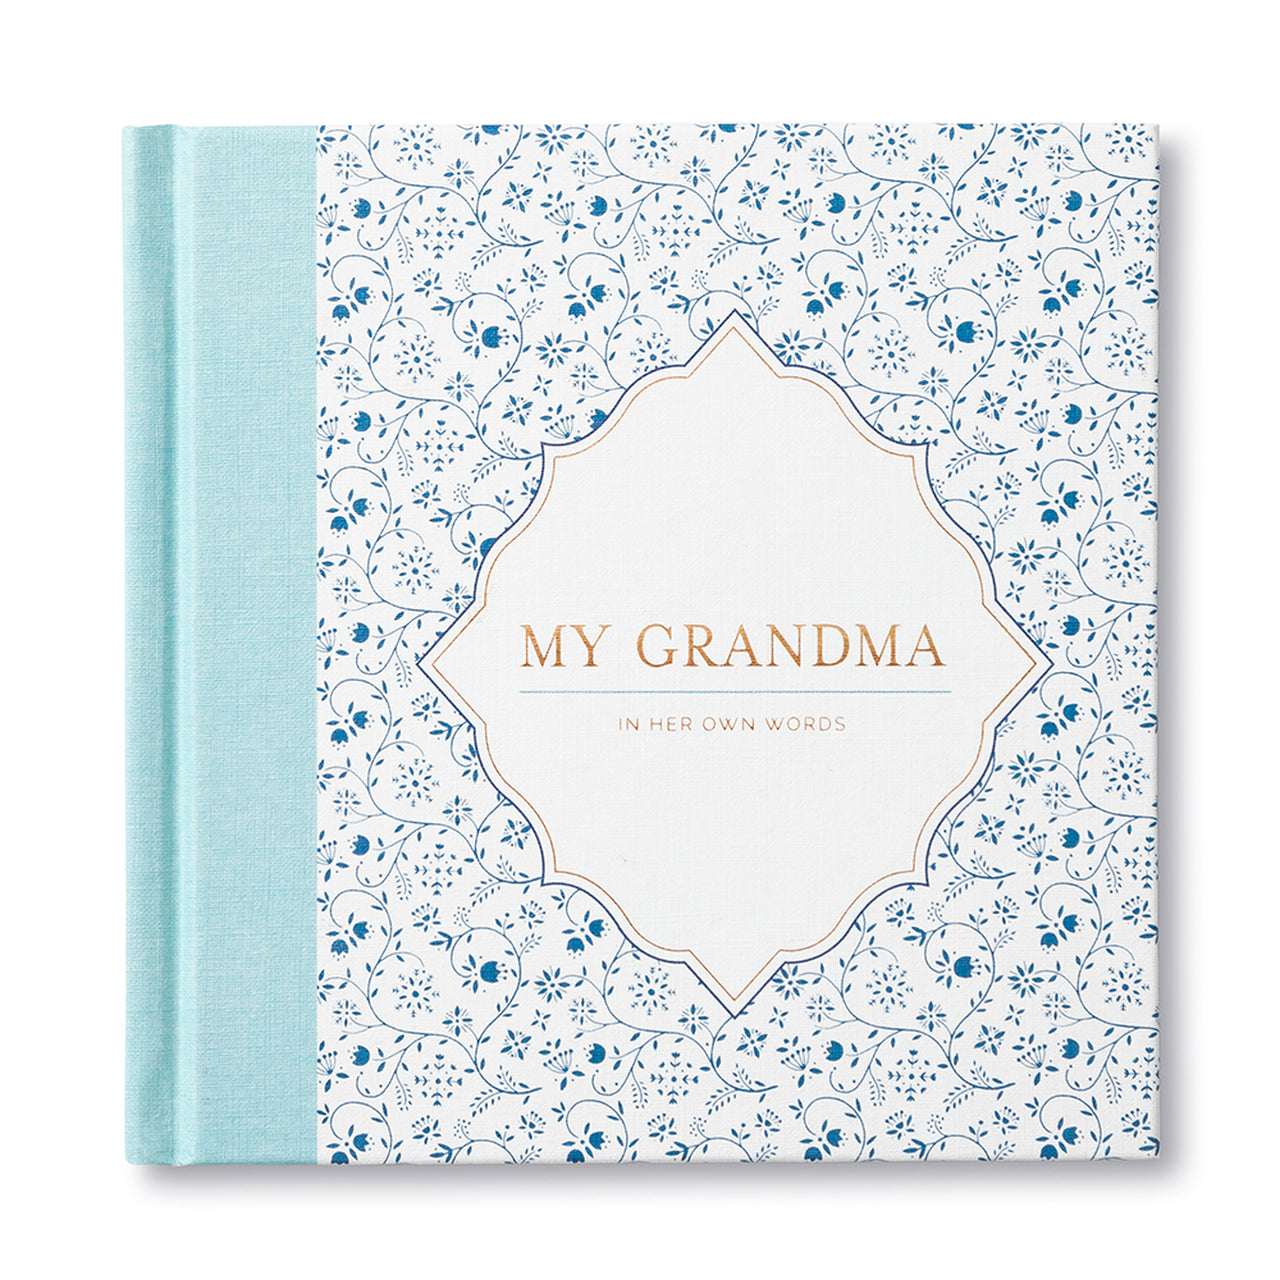 Grandma Interview- "My Grandma in Her Own Words" Book